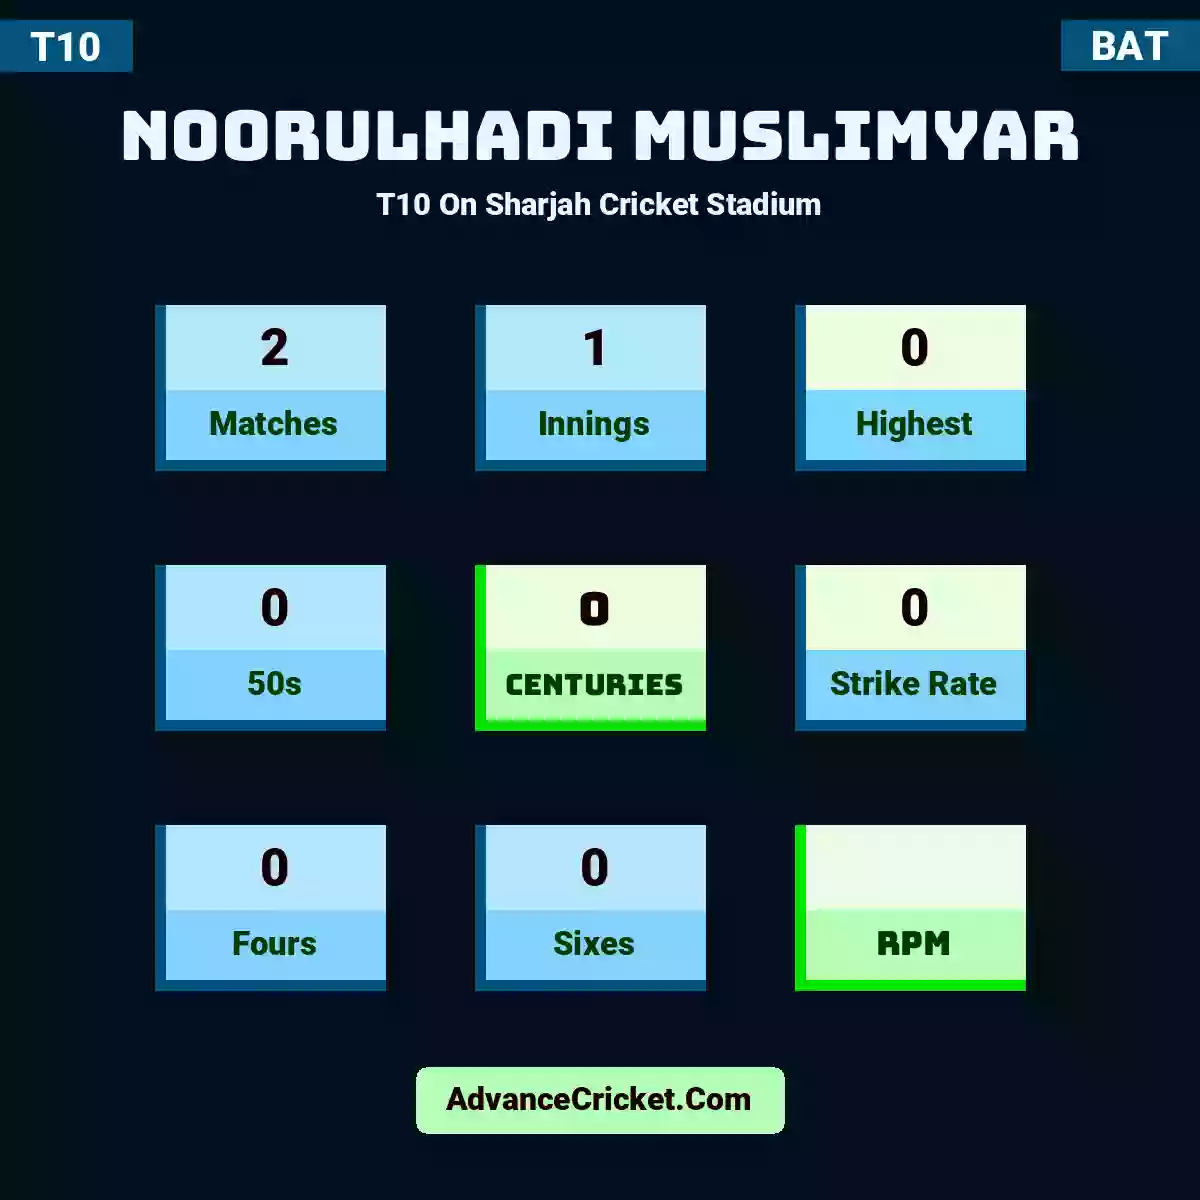 Noorulhadi Muslimyar T10  On Sharjah Cricket Stadium, Noorulhadi Muslimyar played 2 matches, scored 0 runs as highest, 0 half-centuries, and 0 centuries, with a strike rate of 0. N.Muslimyar hit 0 fours and 0 sixes.